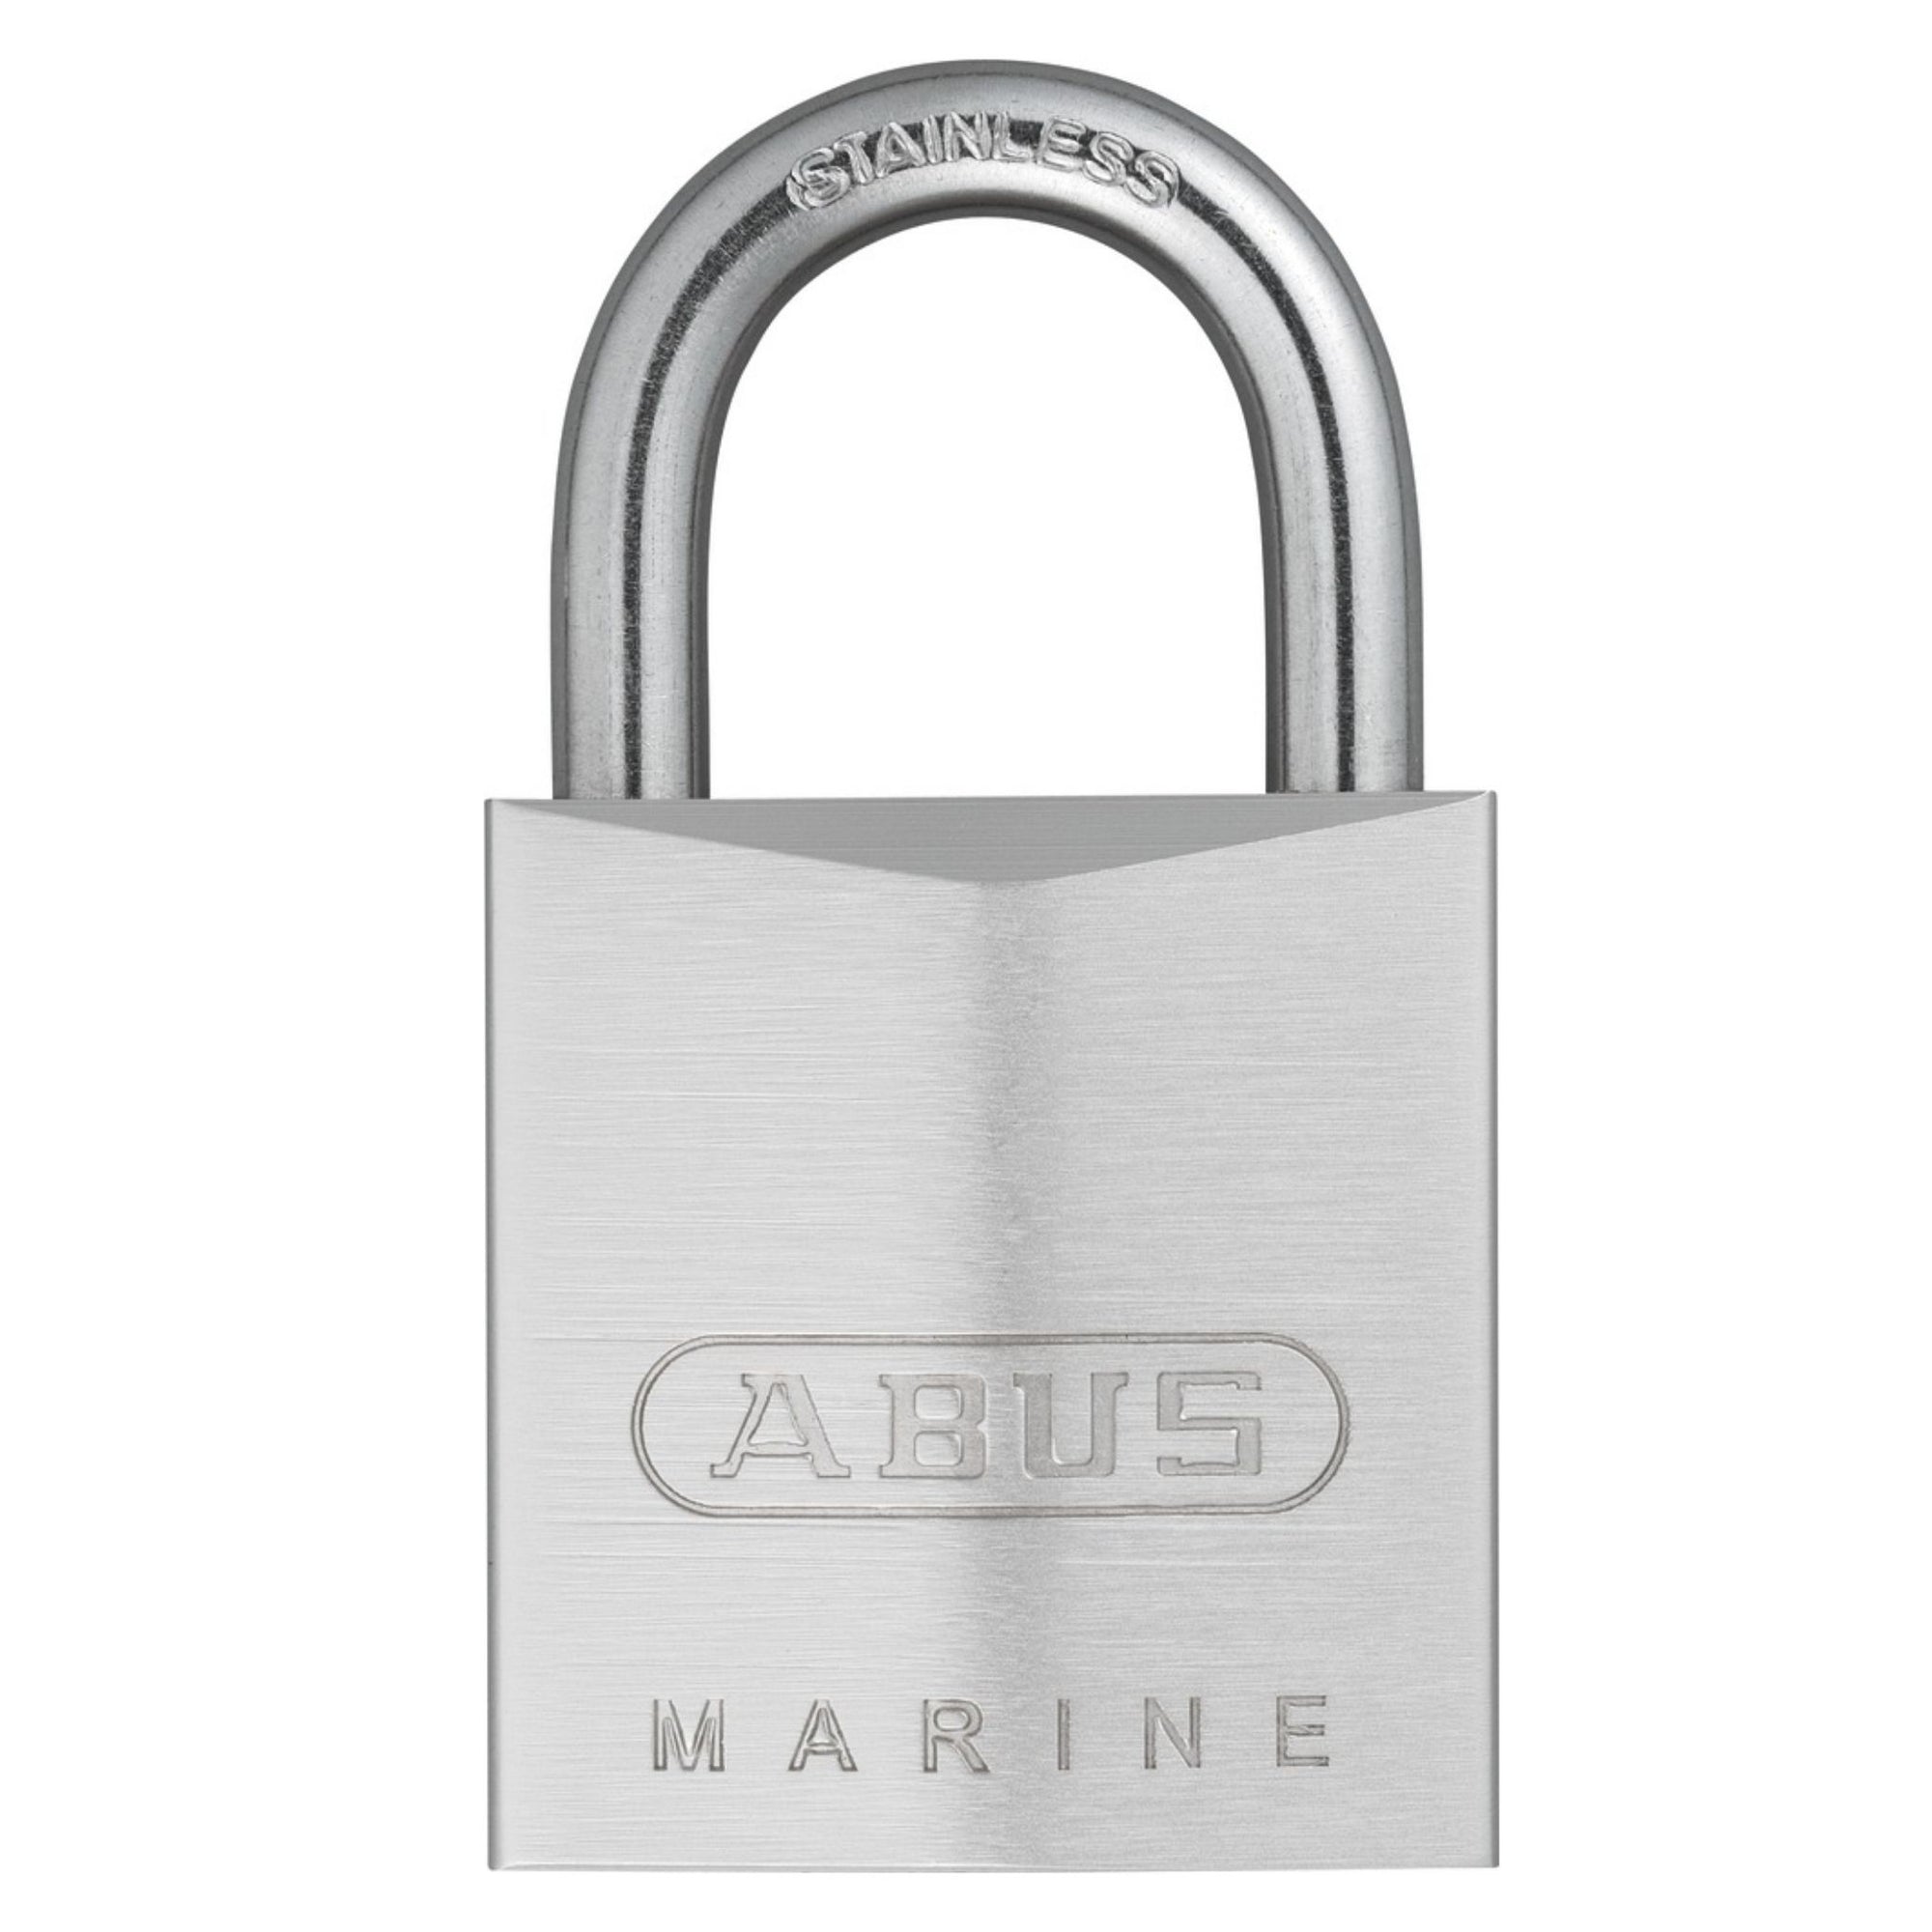 Abus 75IB/30 KA Weatherproof Brass Padlock Keyed Alike with Stainless Steel Shackle - The Lock Source